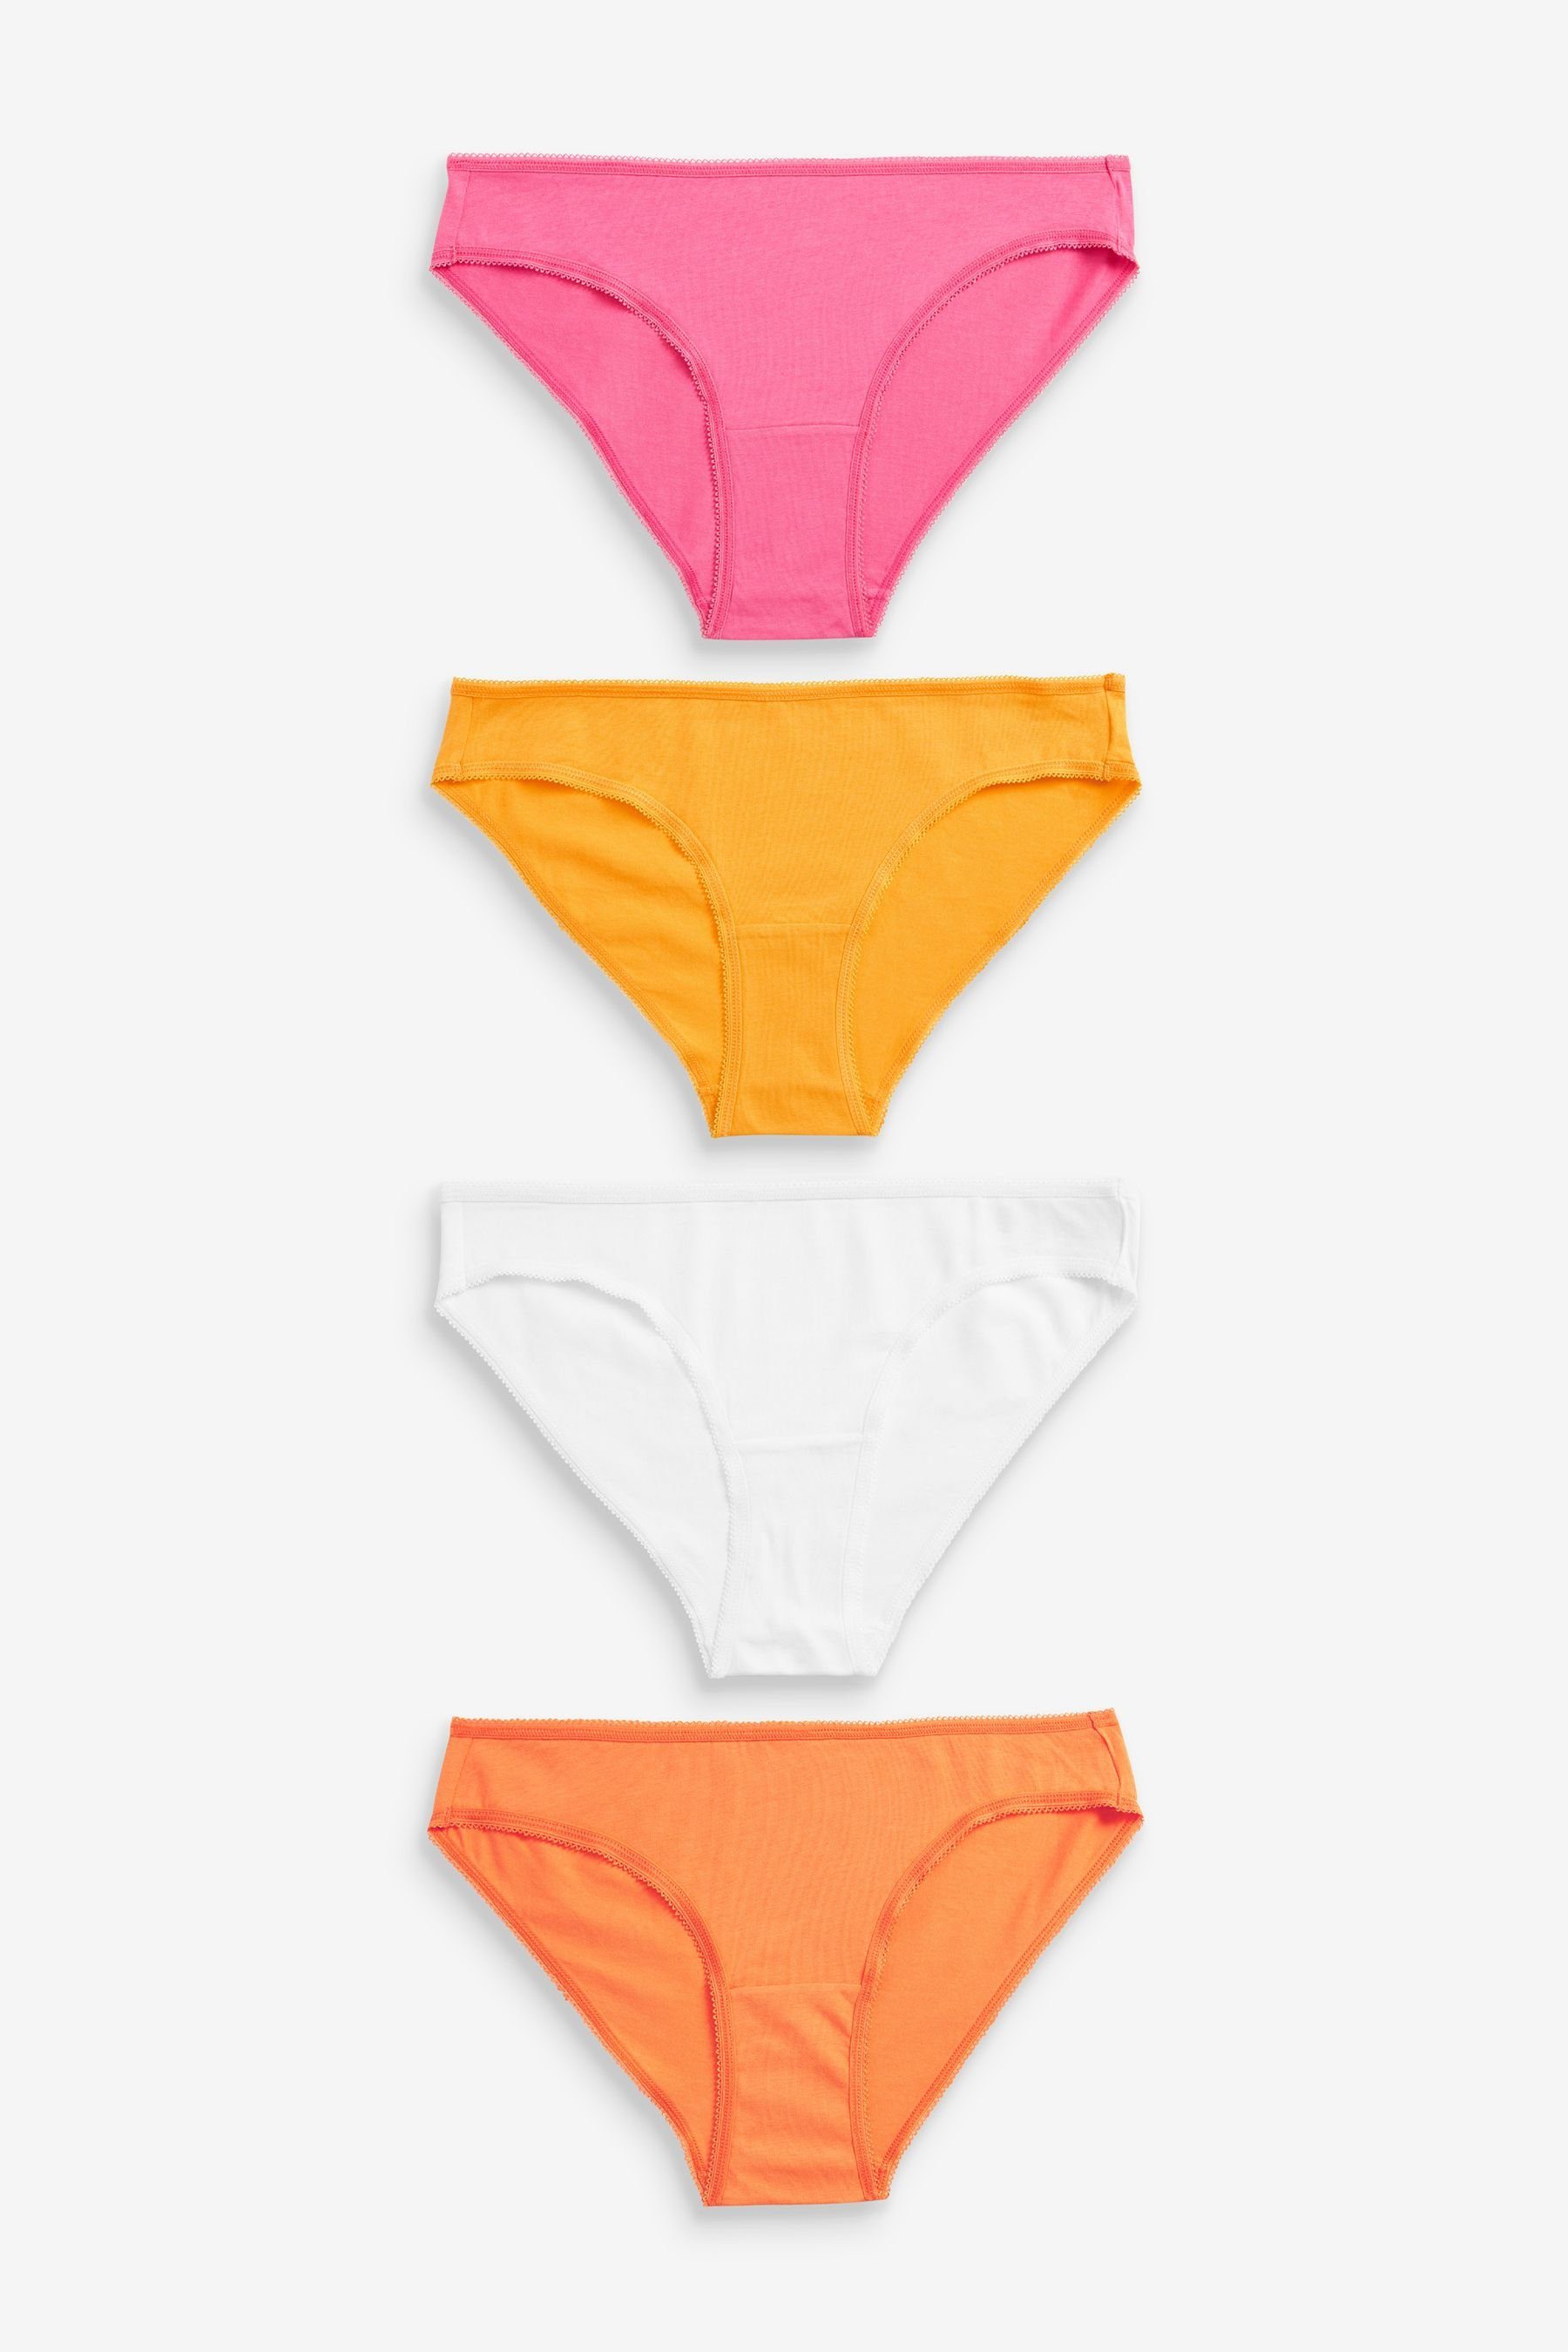 Next Bikinislip Bikini-Slips mit hohem Baumwollanteil im 4er-Pack (4-St) Orange/Pink/White